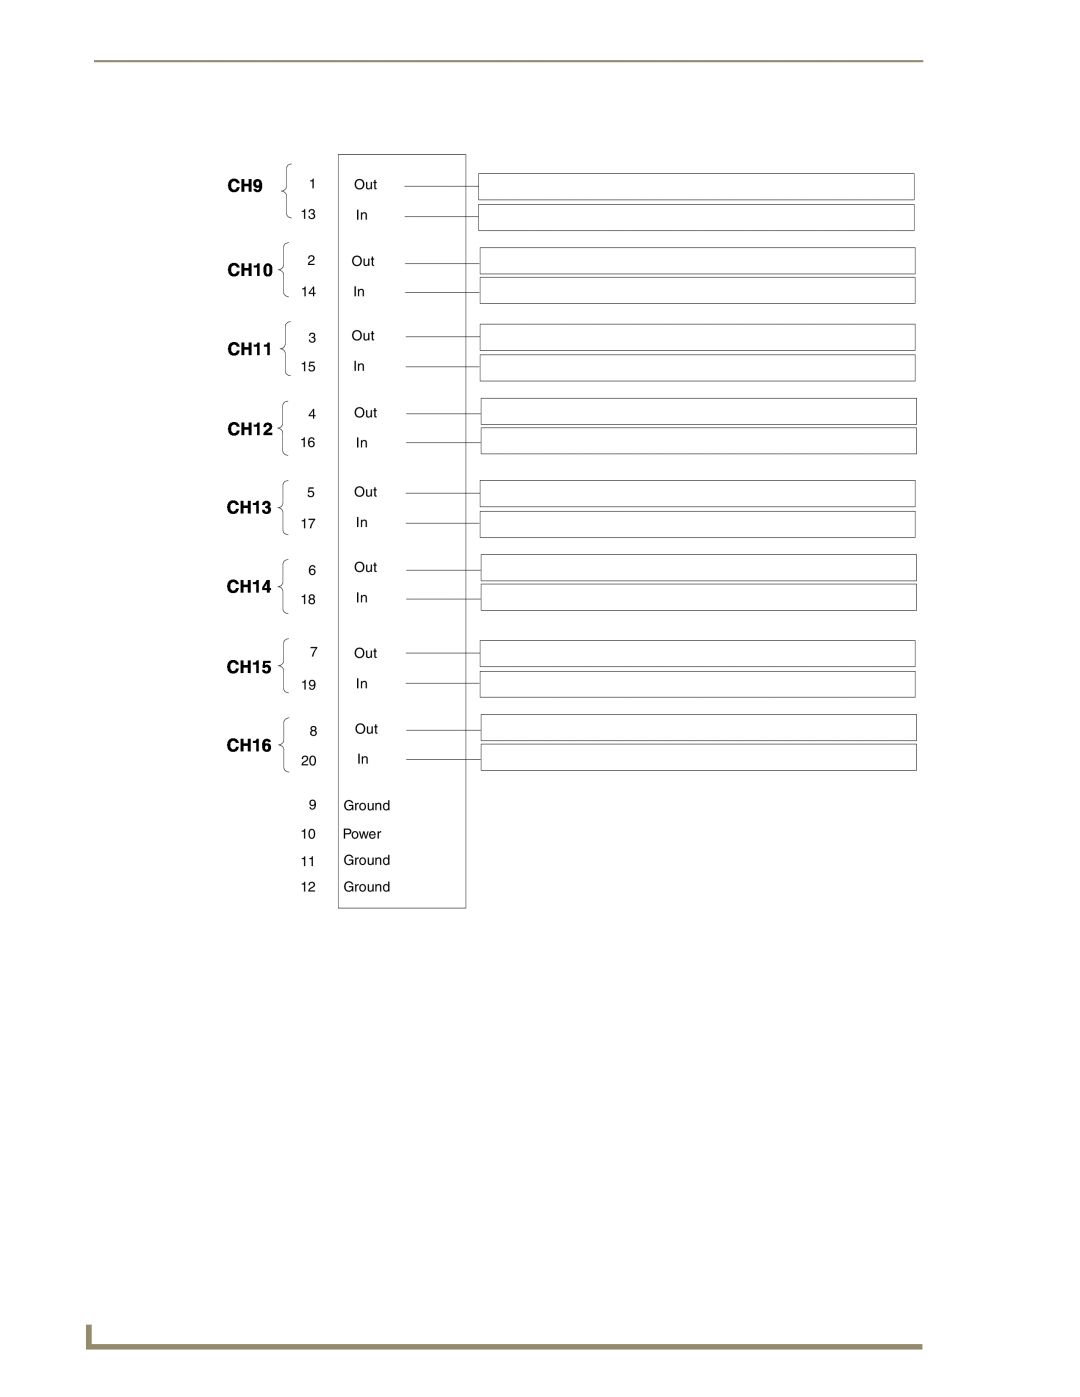 AMX NXP-CPI16 manual CH10, CH11, CH12, CH13, CH14, CH15, CH16 